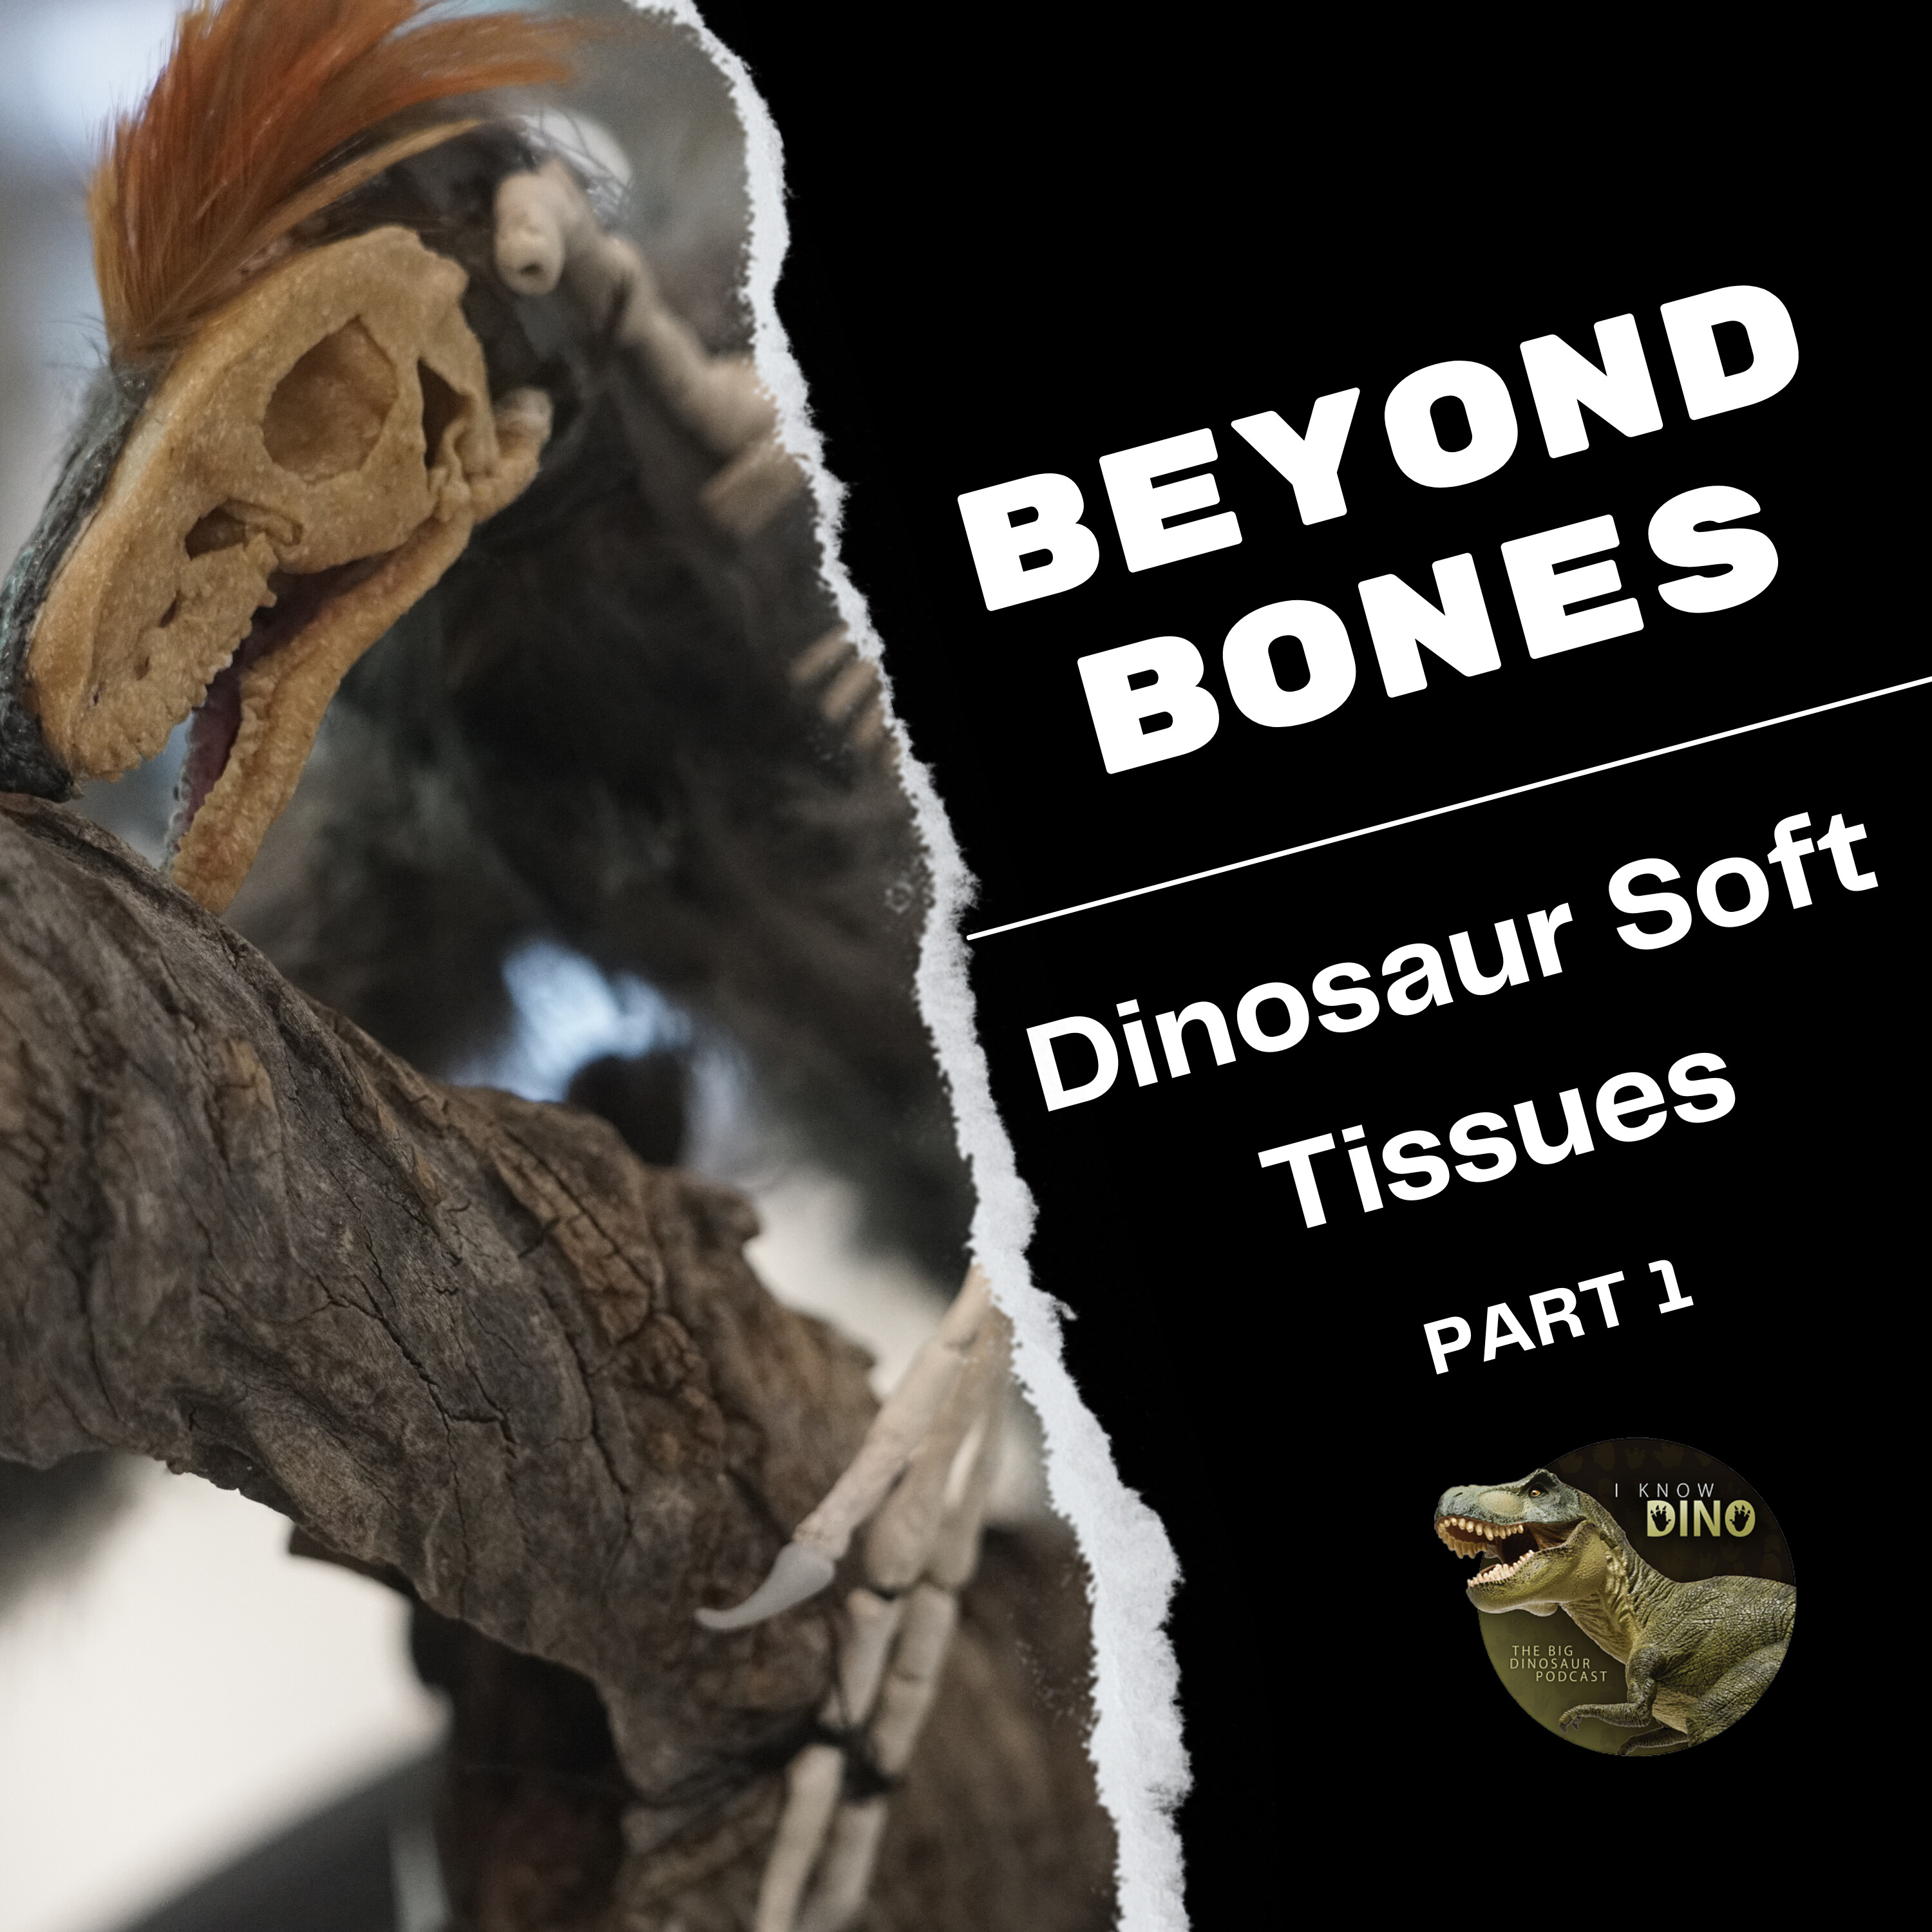 Beyond Bones: Dinosaur Soft Tissues